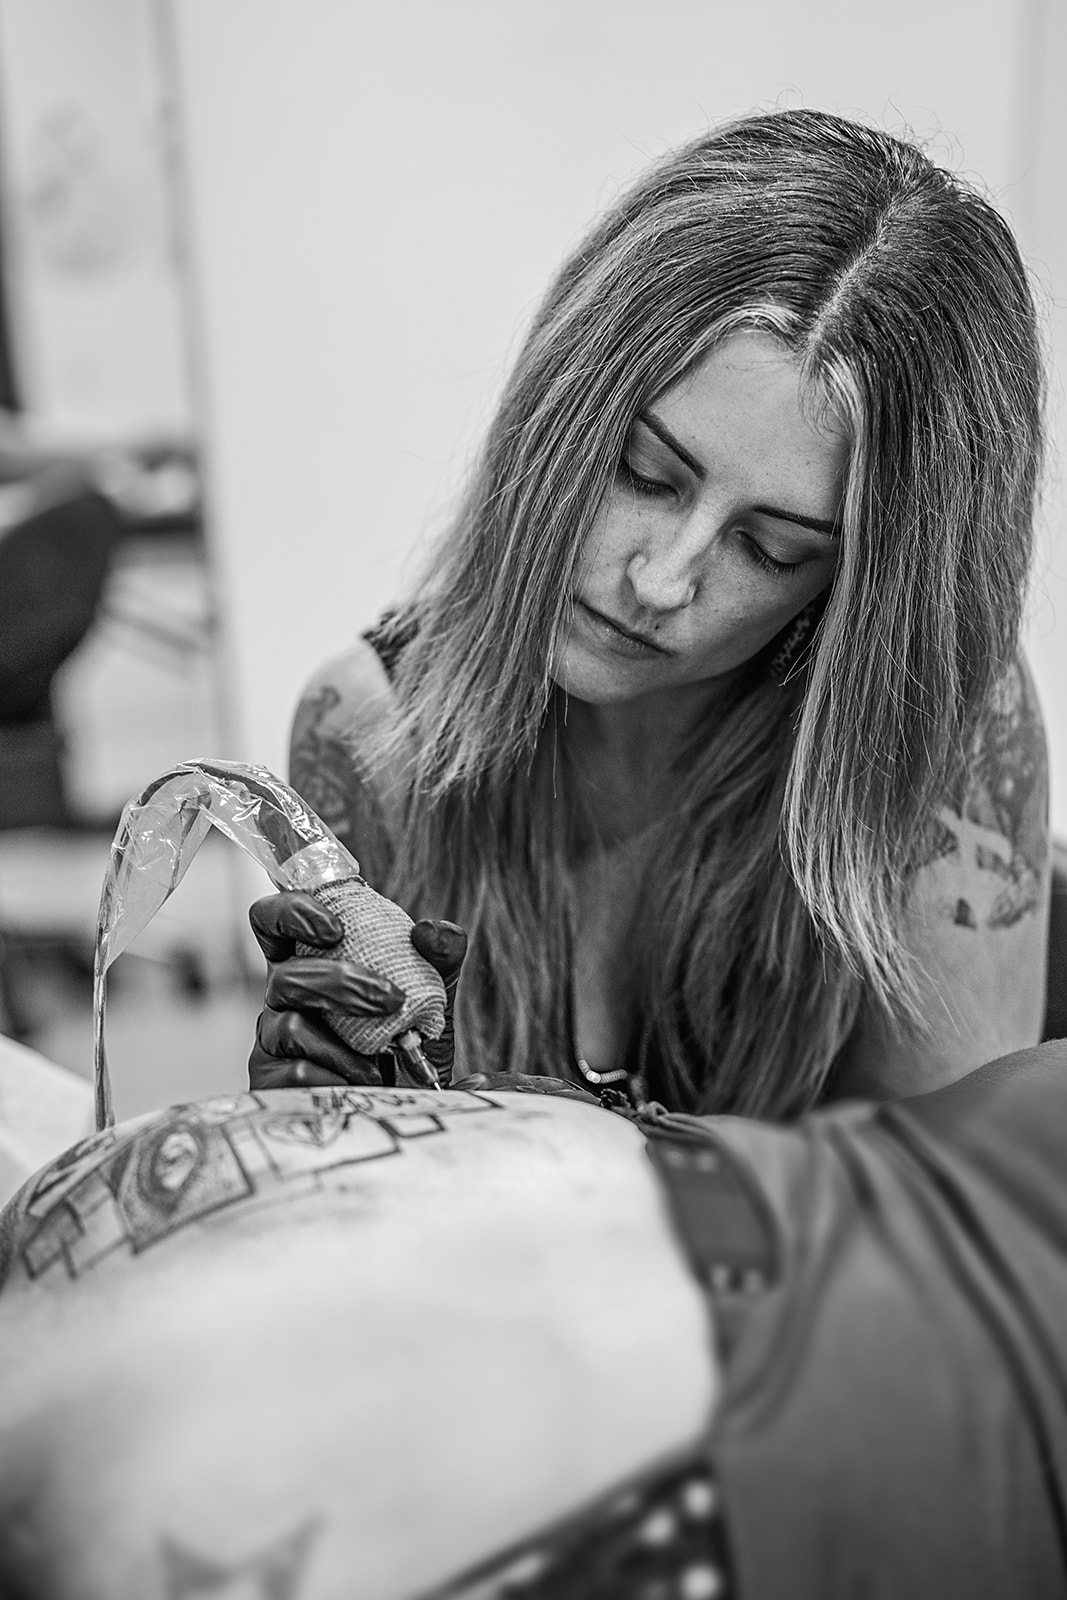 A portrait session for a tattoo artist in edmonton alberta